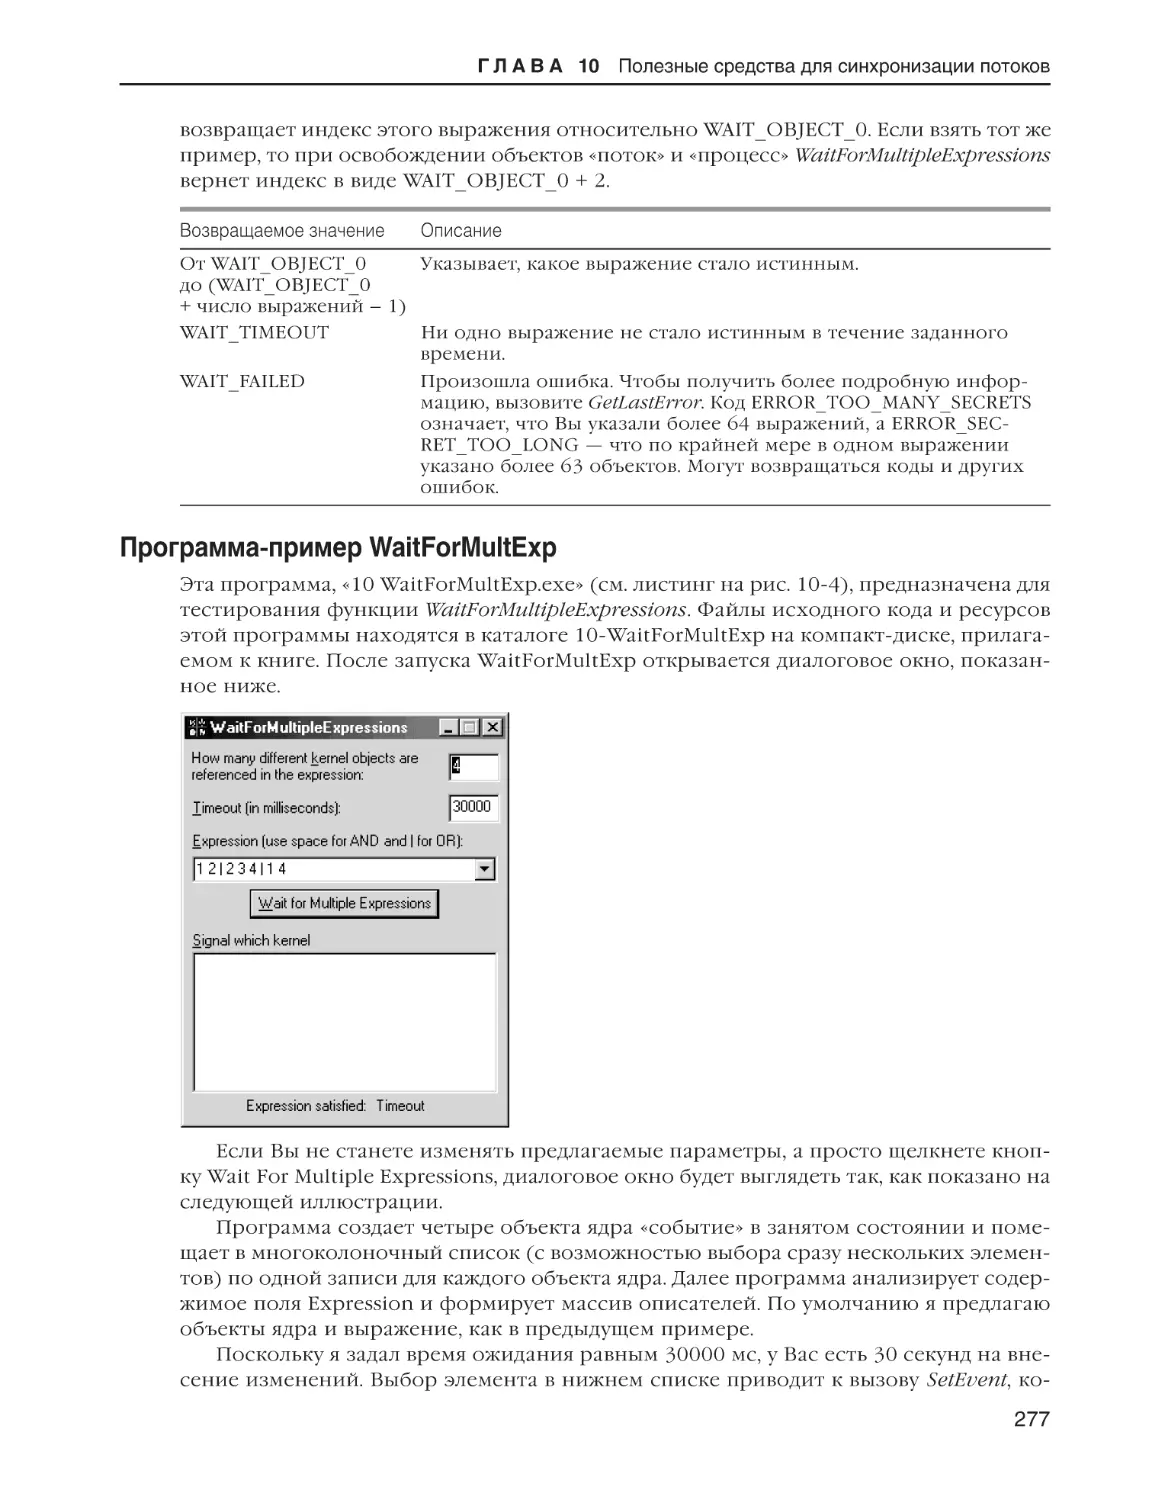 Программа-пример WaitForMultExp